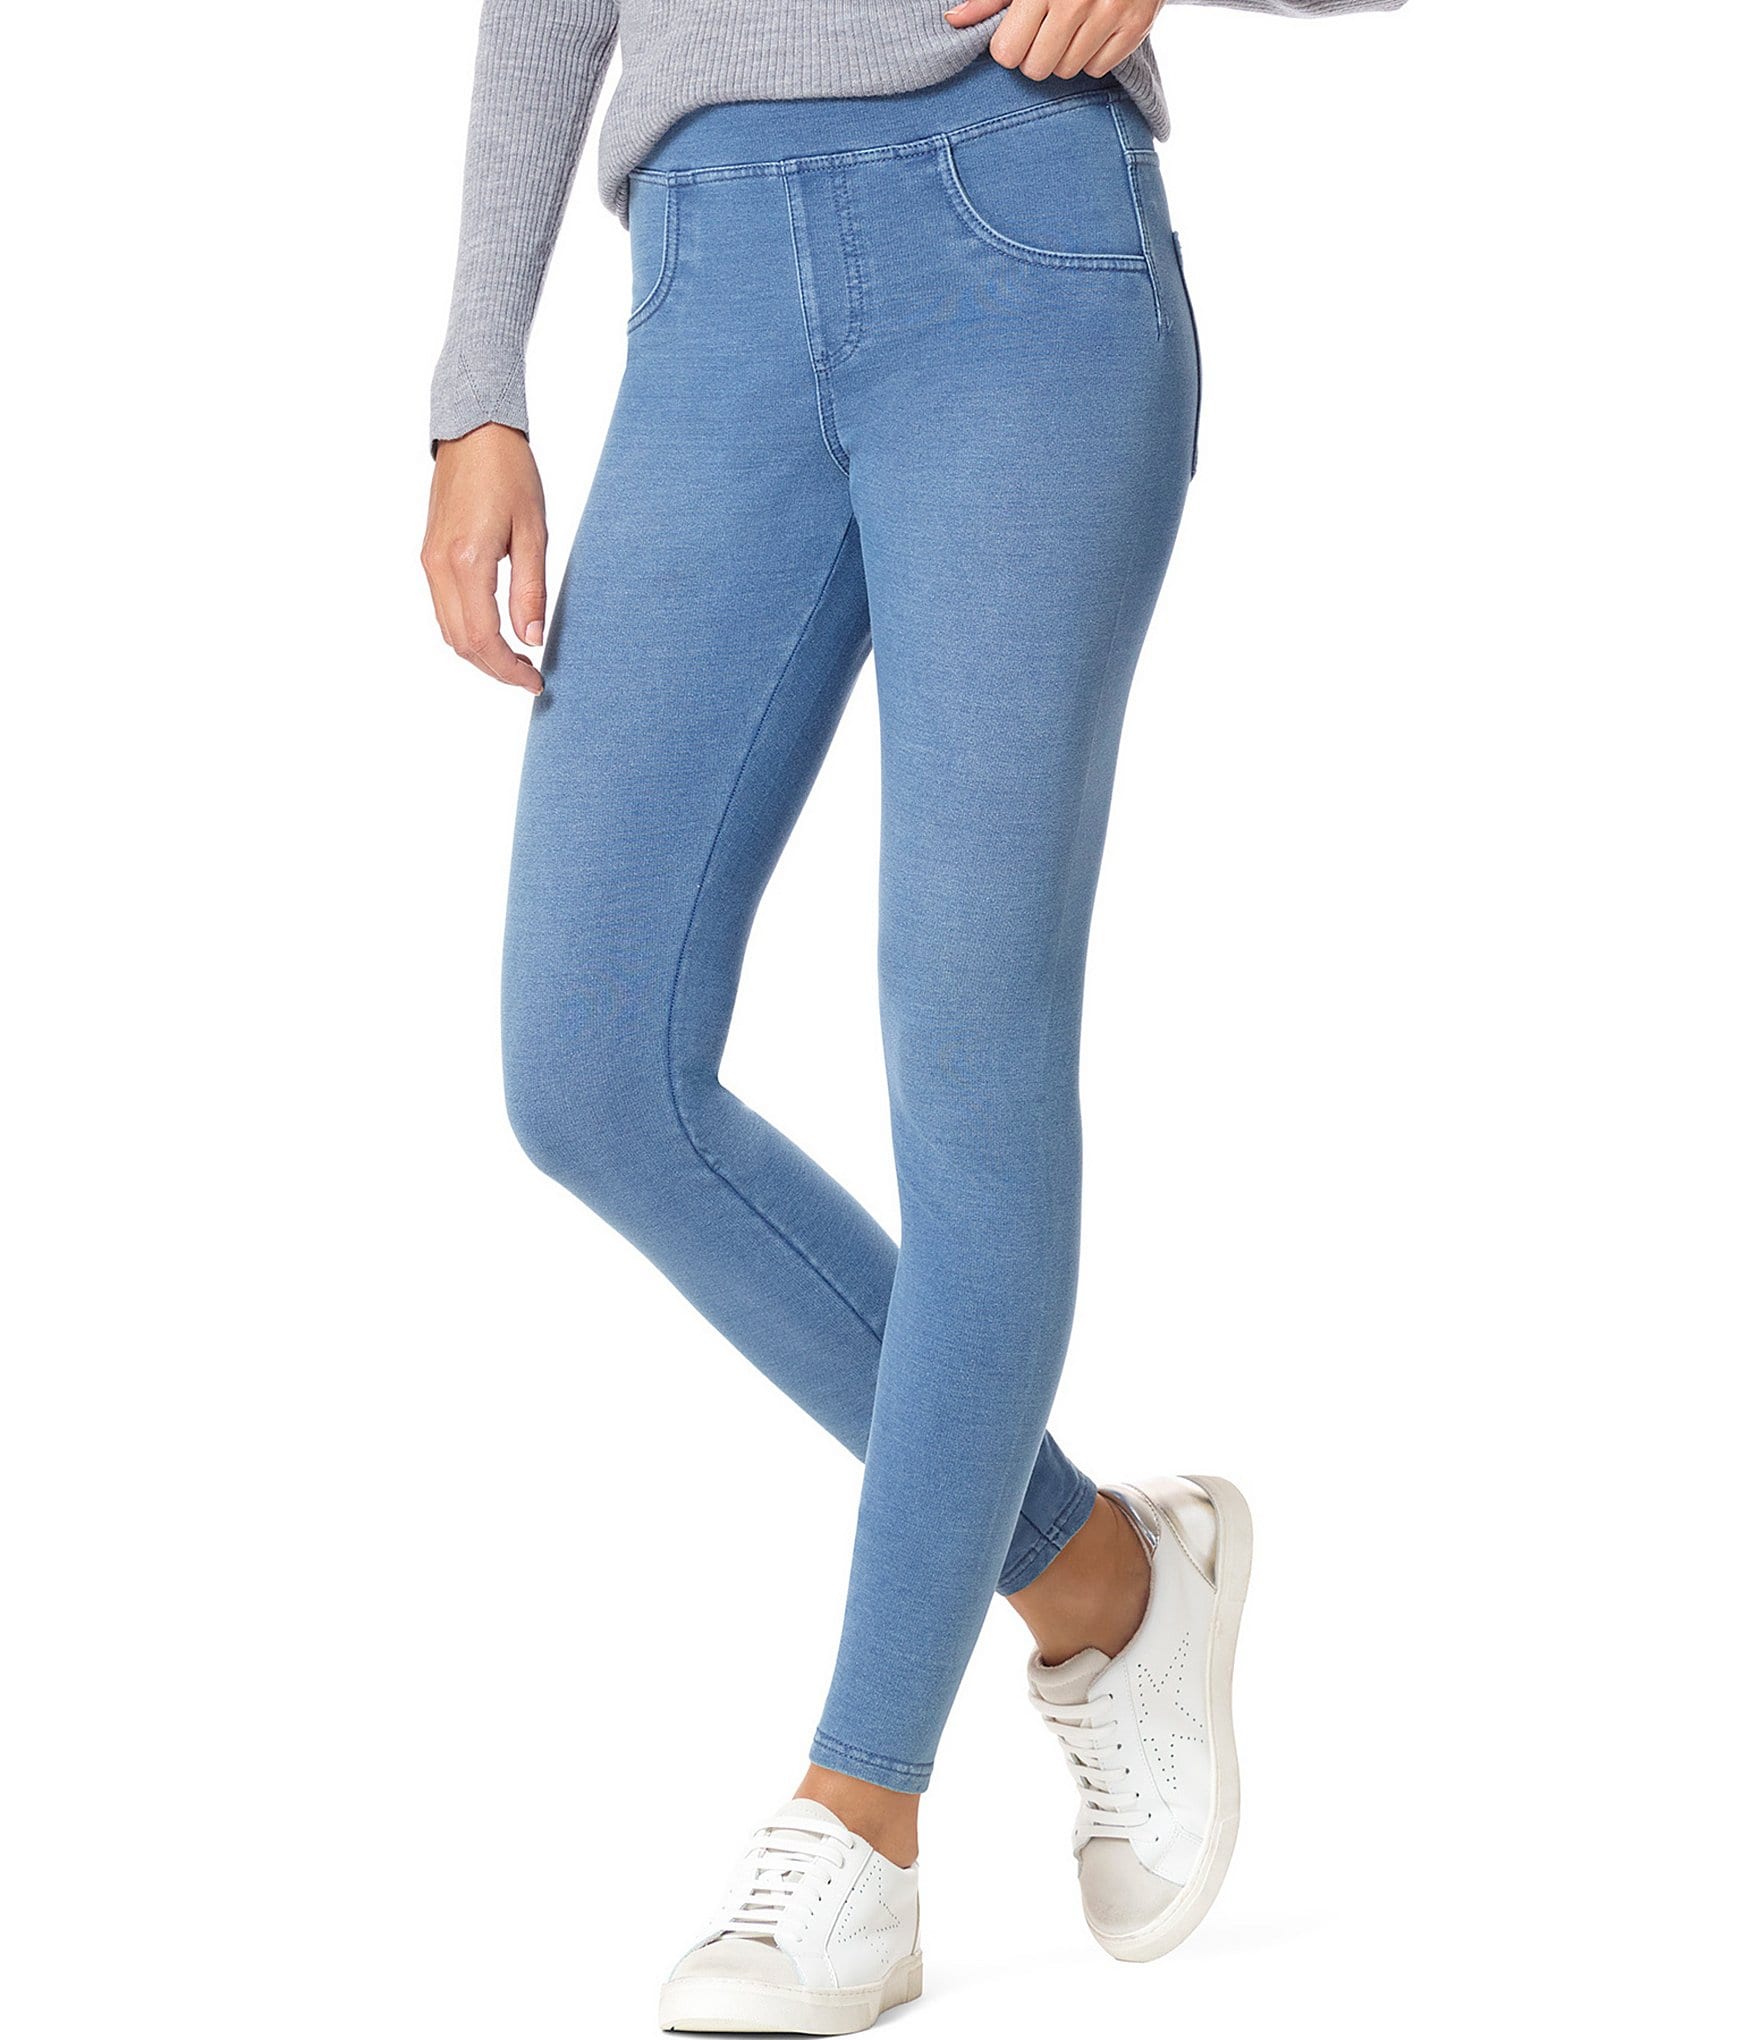 blue jeans: Women's Leggings